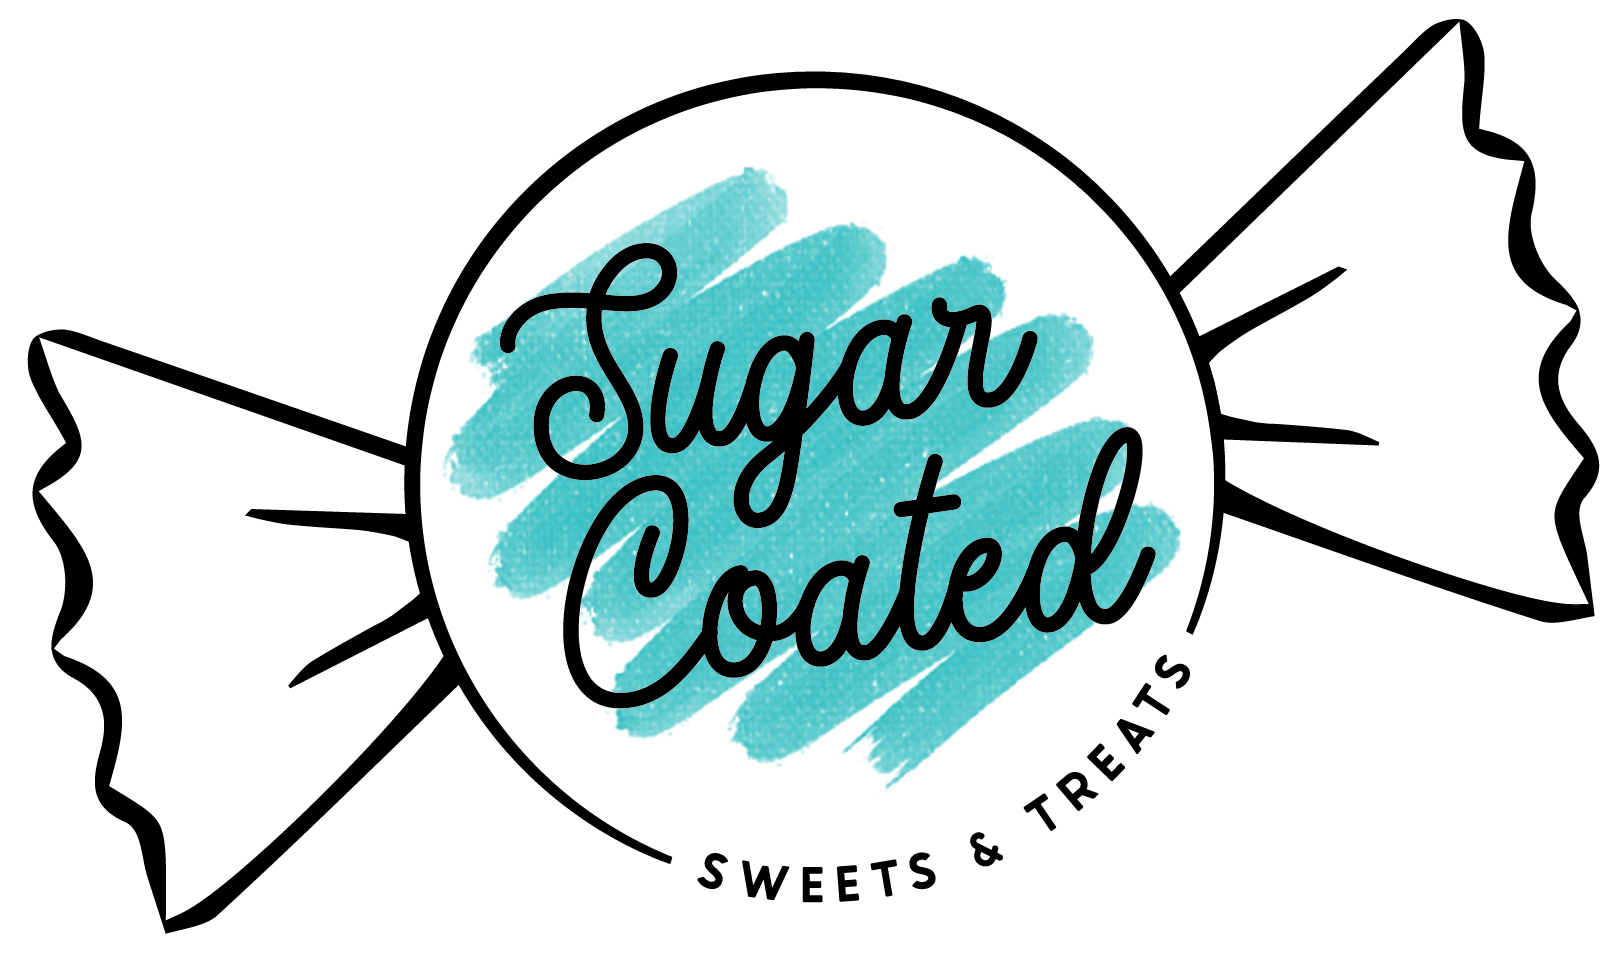 Sugar Coated Sweets and Treats